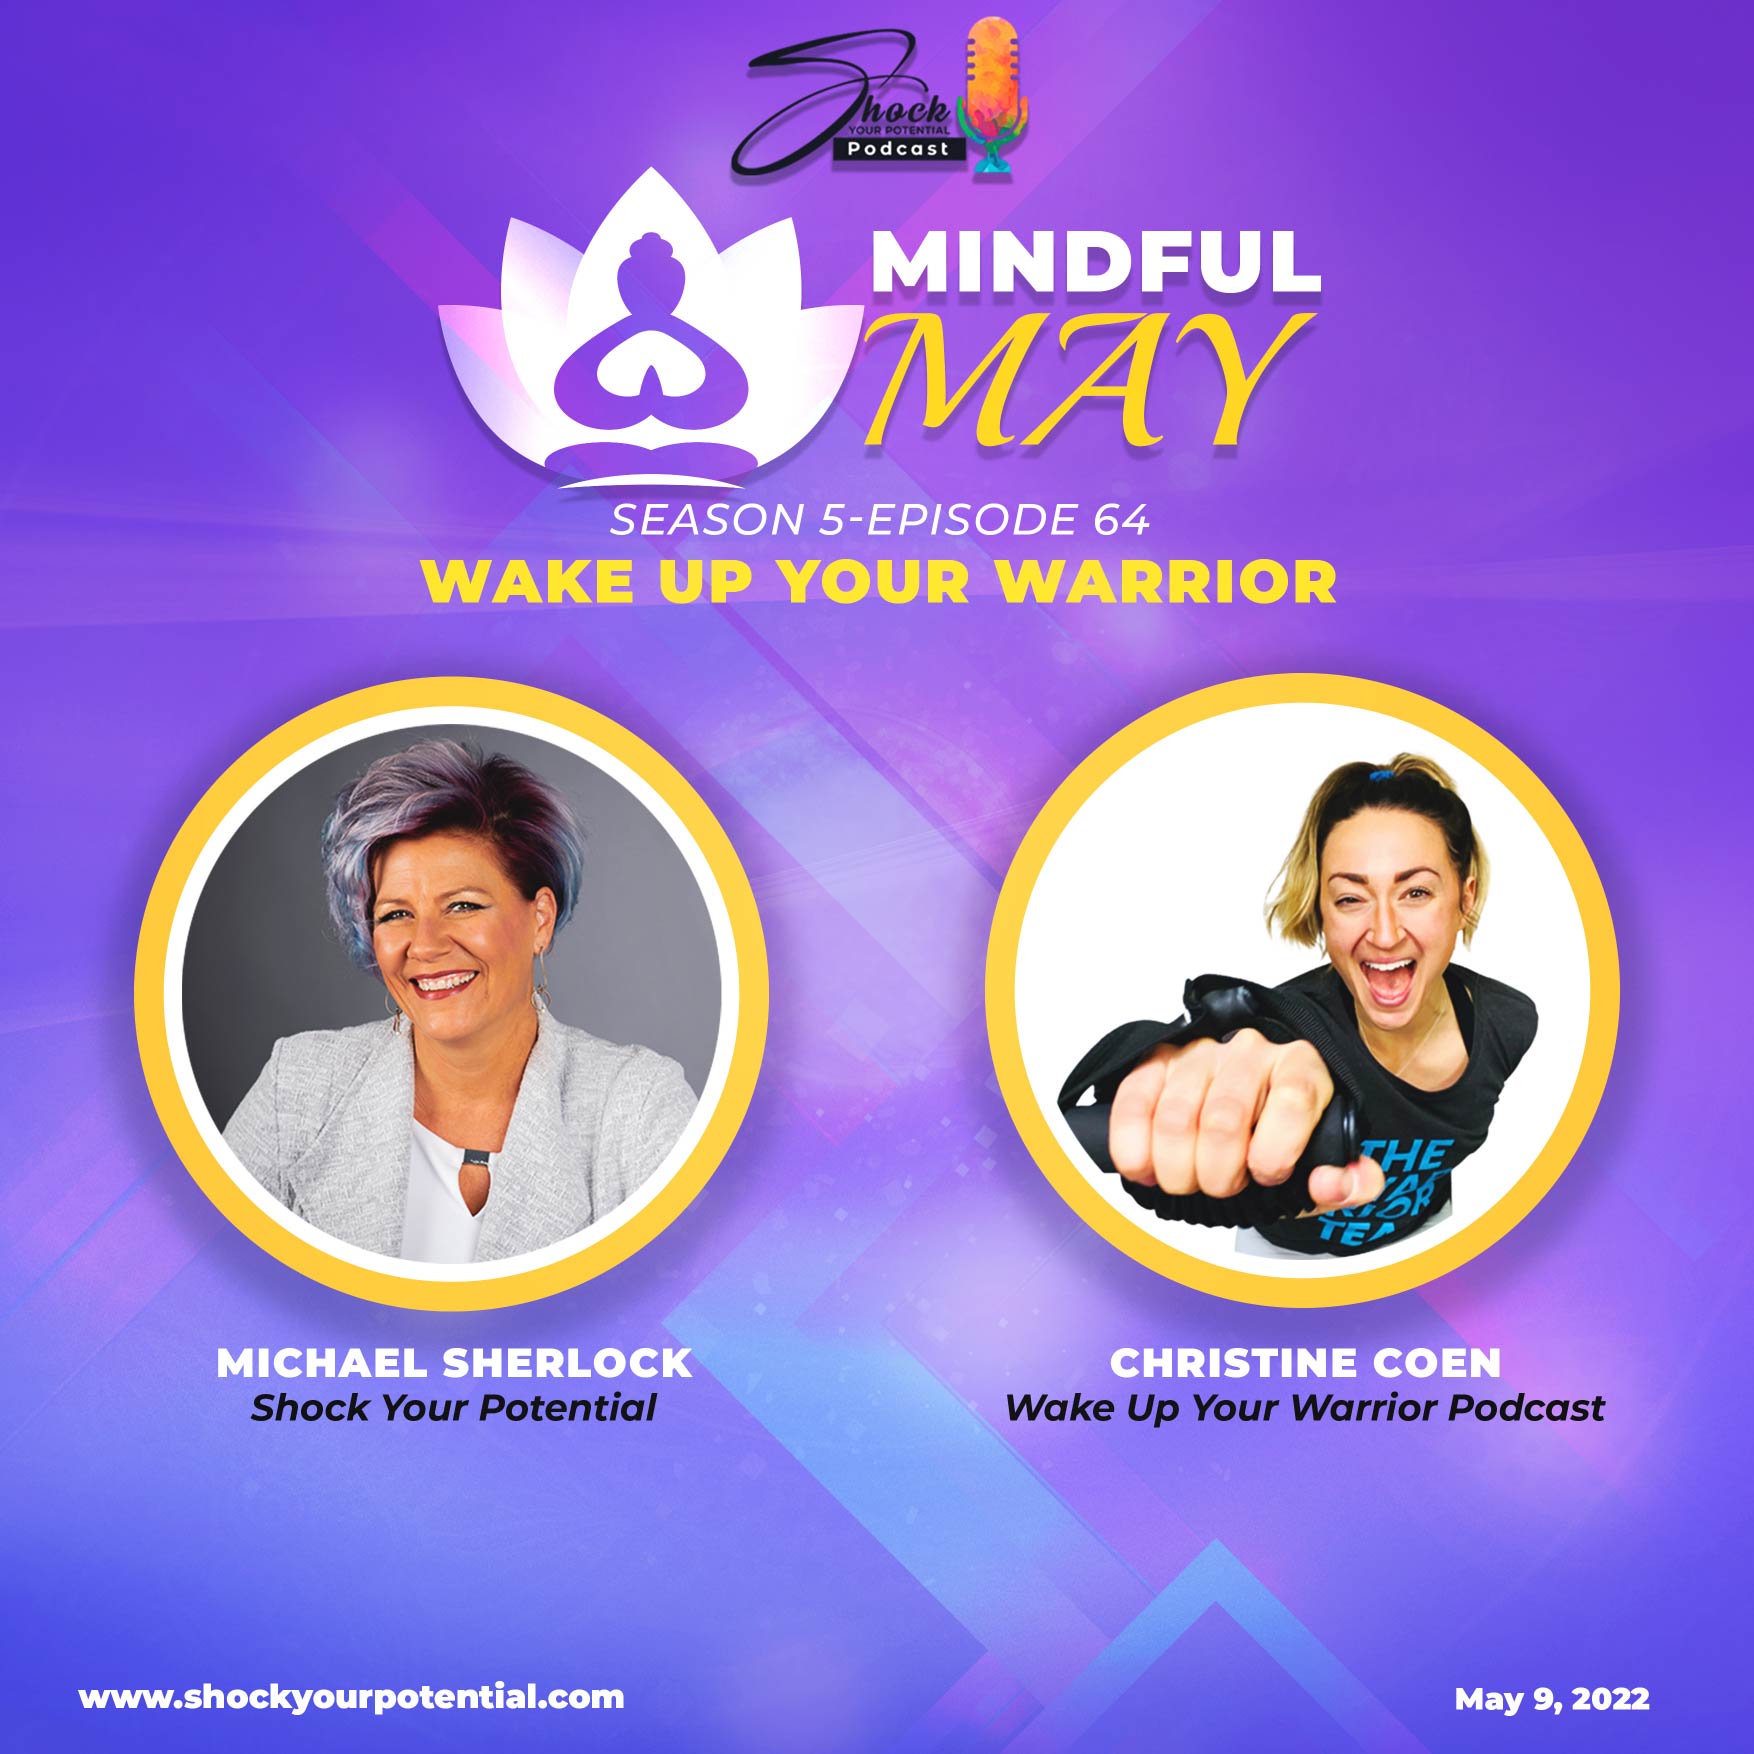 Wake Up Your Warrior – Christine Coen